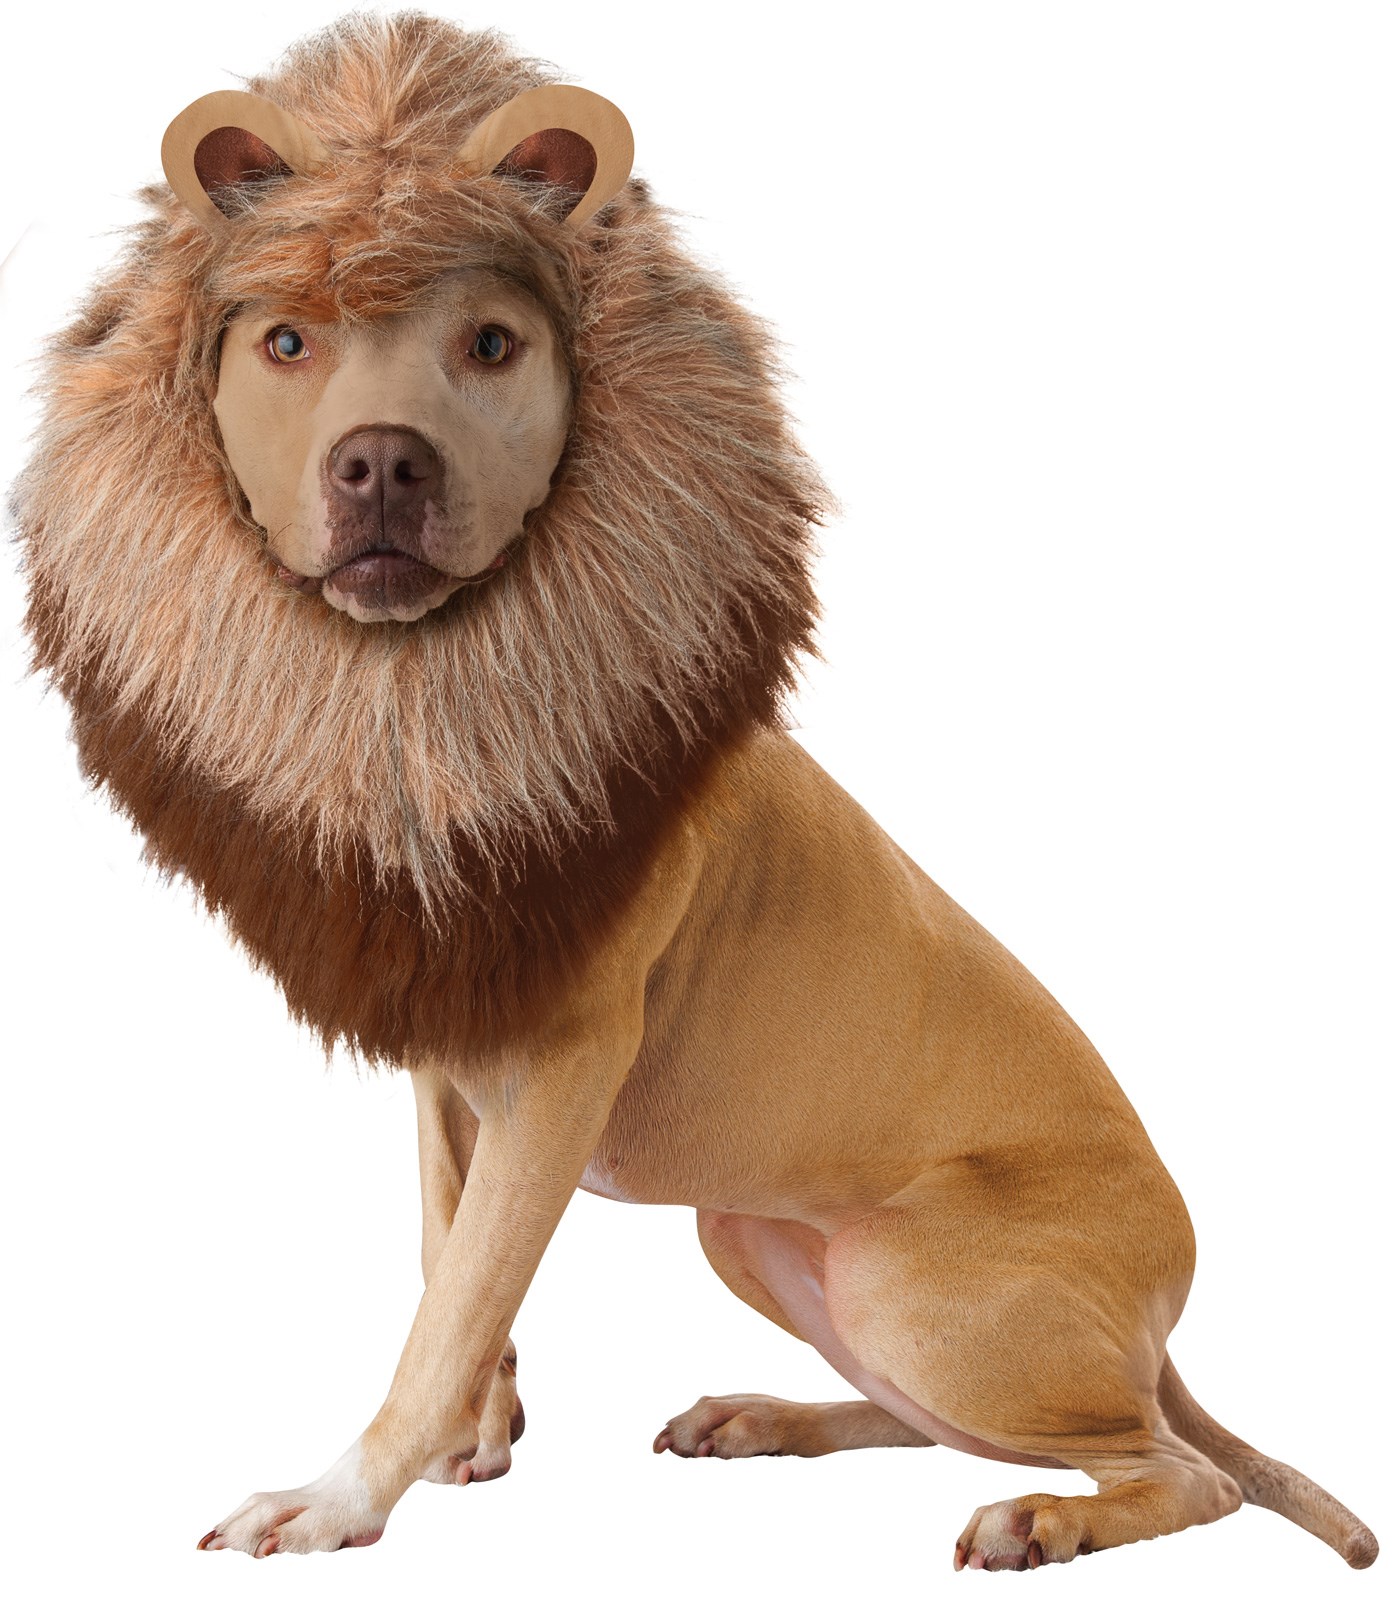 animal-planet-lion-dog-costume-bc-806293.jpg?zm=800,800,1,0,0